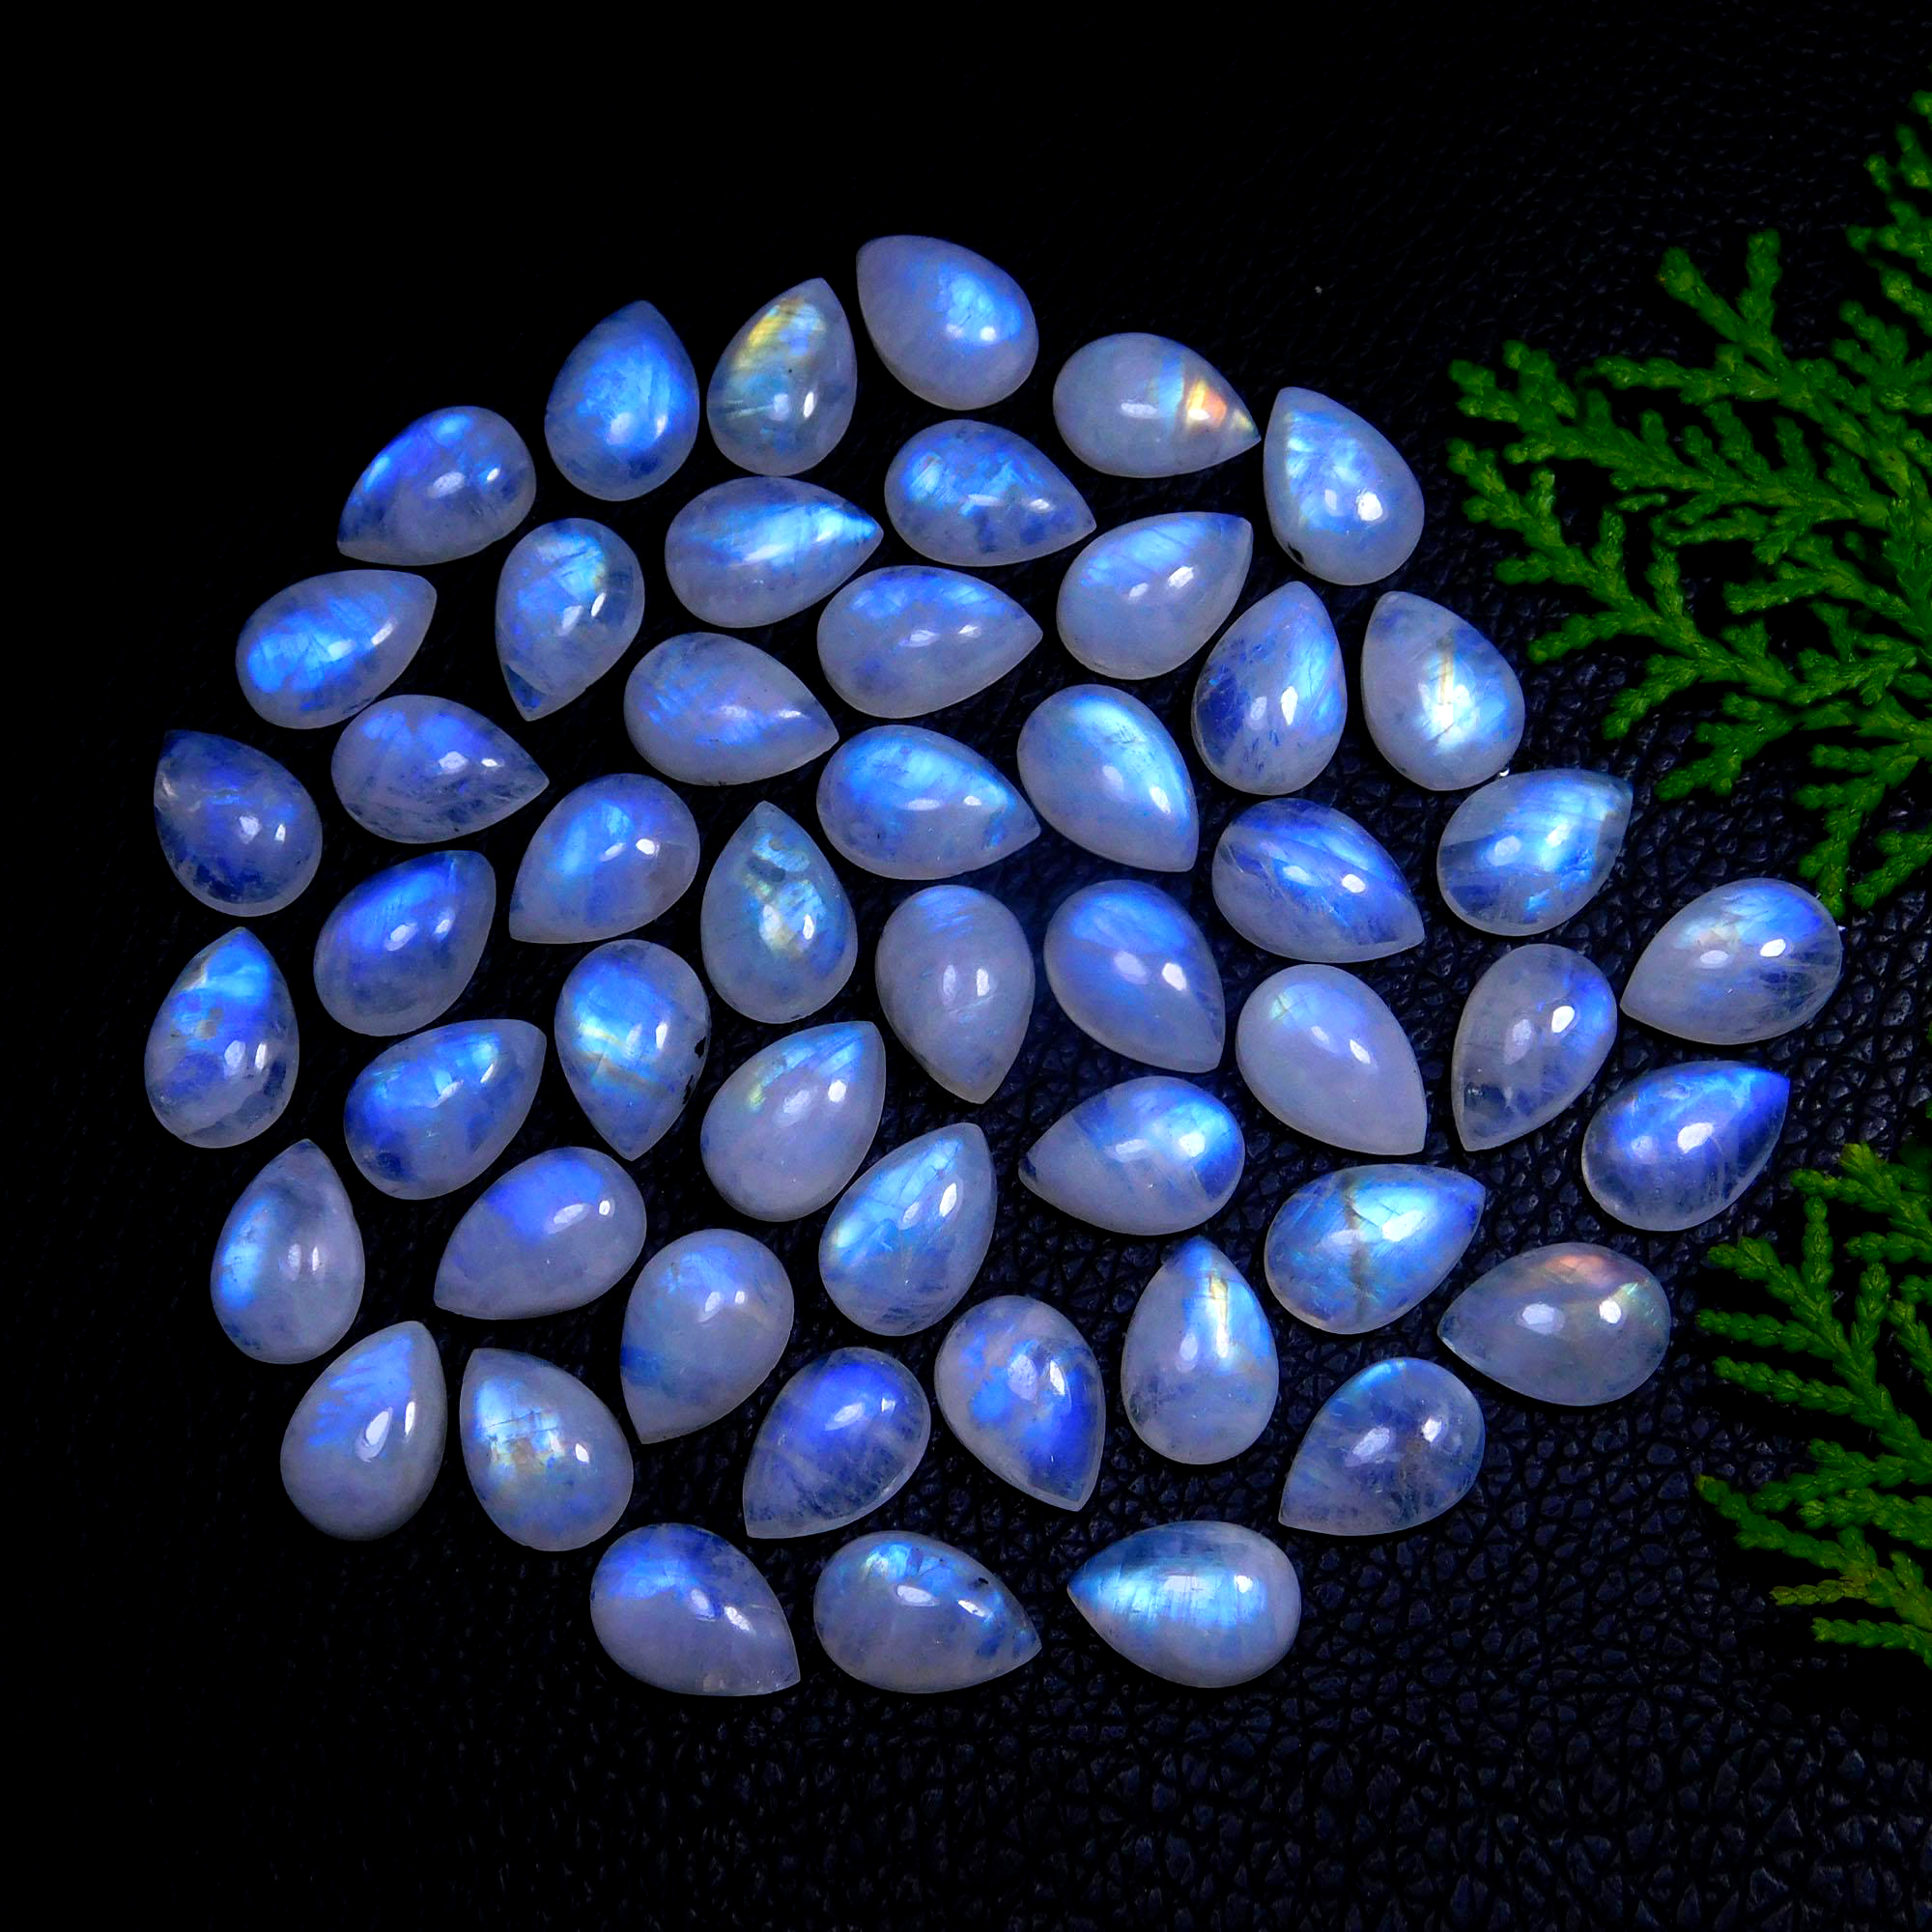 50Pcs 213Cts Natural Rainbow Moonstone Pear Shape Blue Fire Cabochon Lot Semi Precious Loose Gemstone Jewelry Supplies Crystal 13X9mm #9878